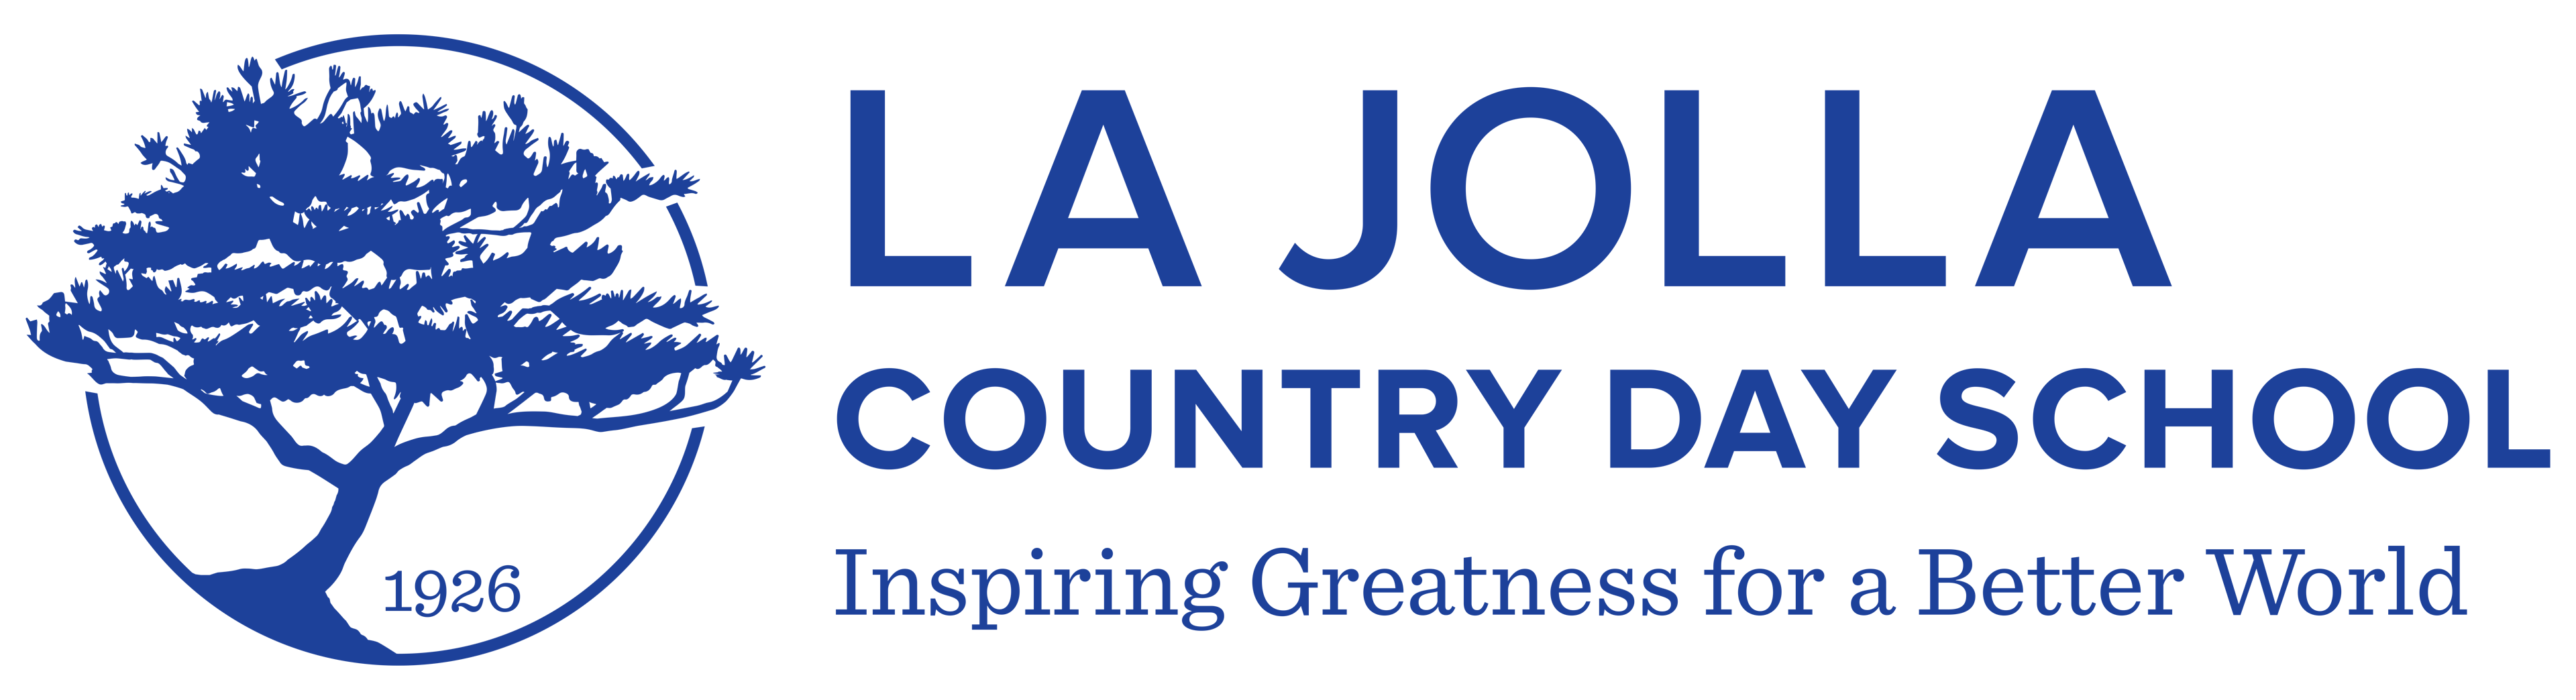 La Jolla Country Day School logo